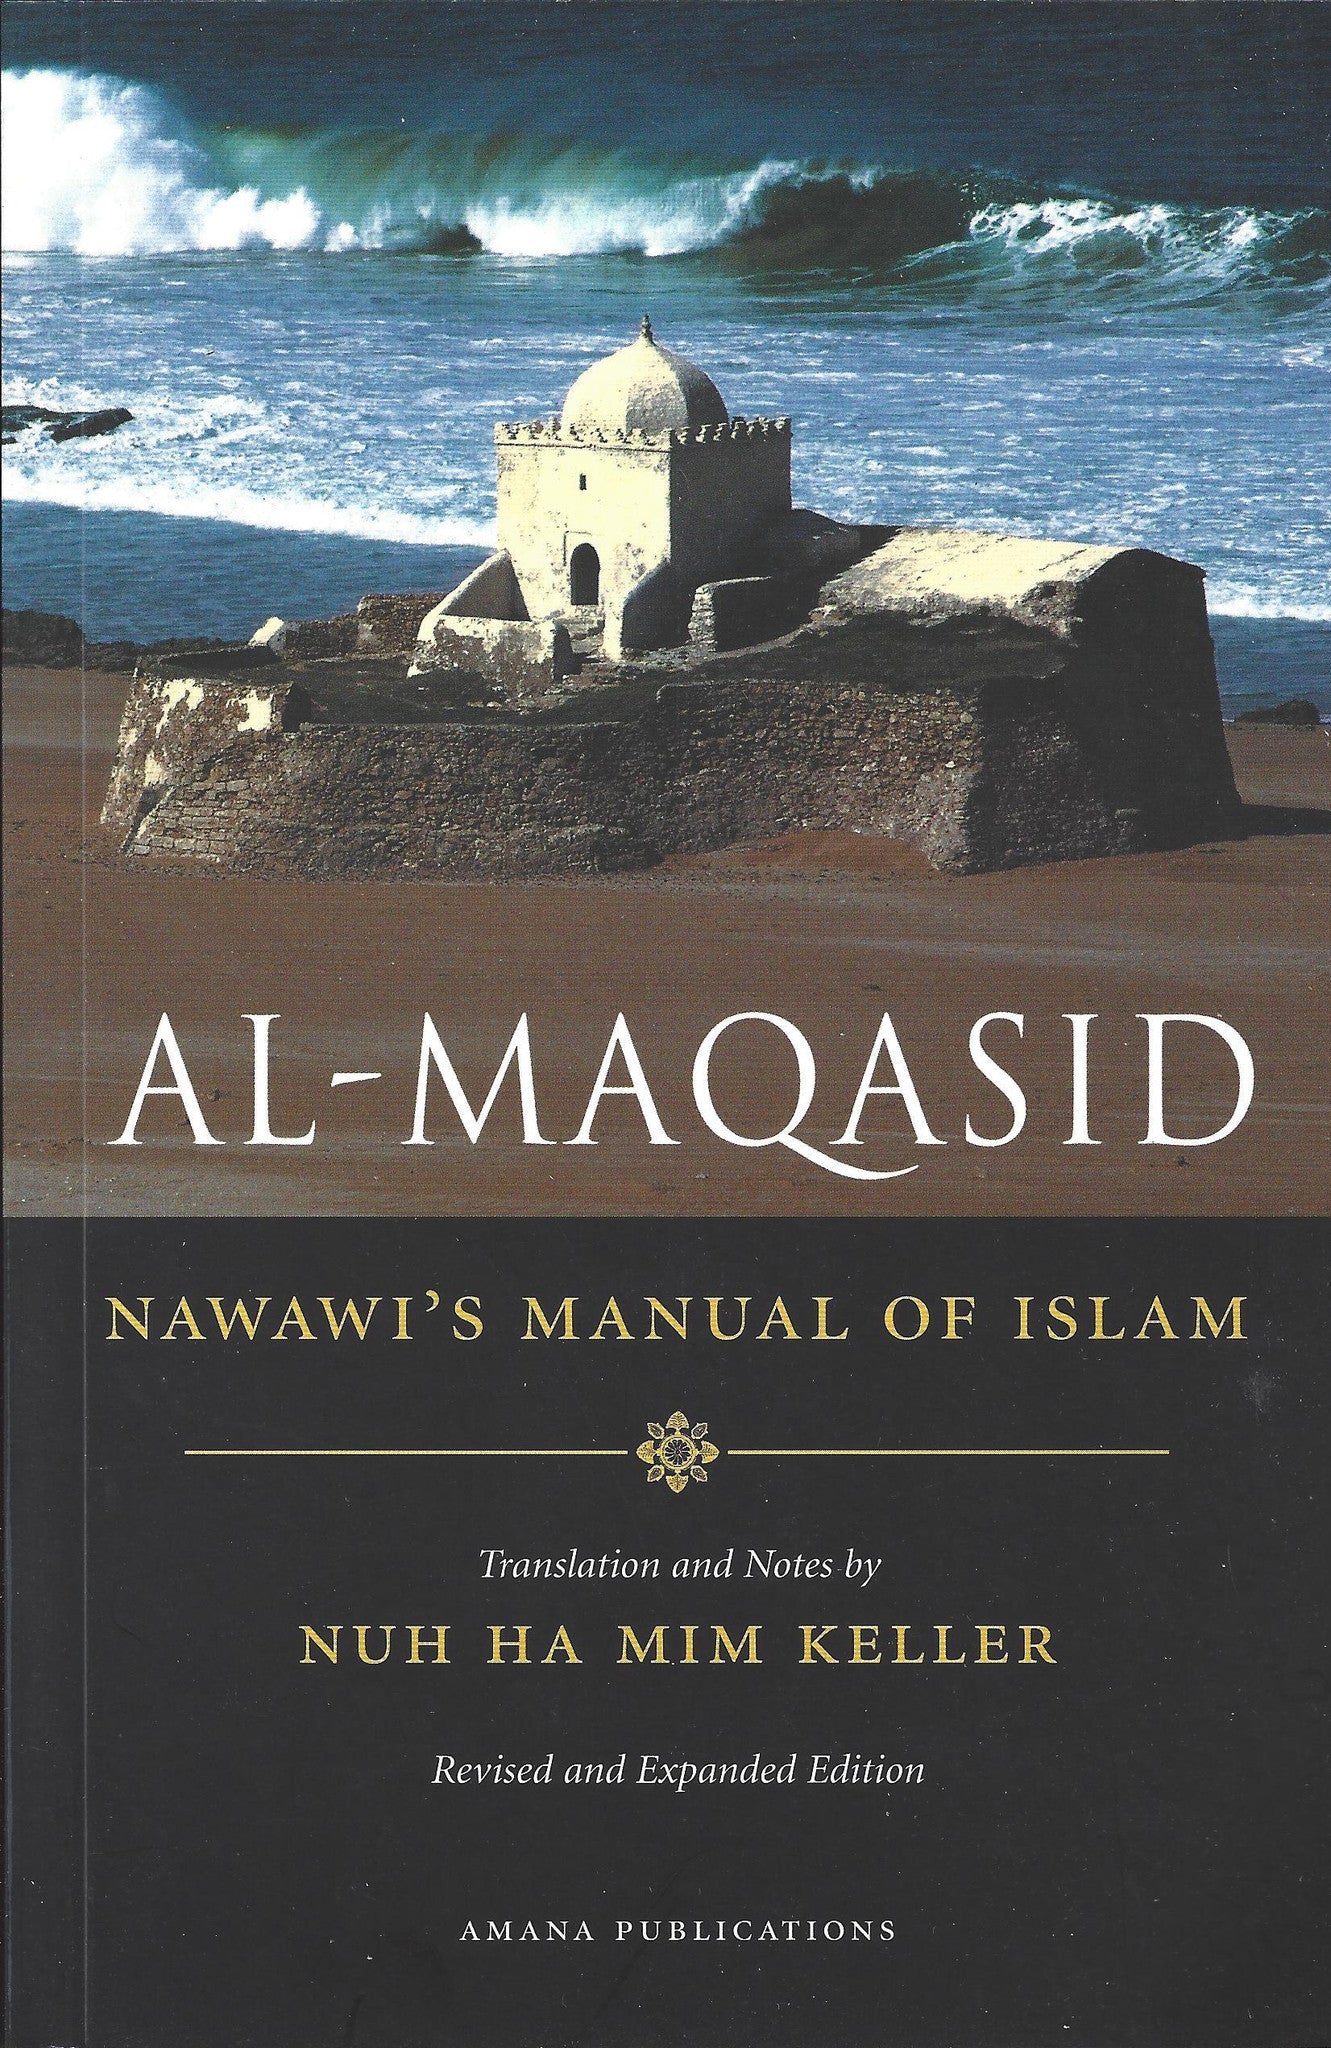 Al-Maqasid: Nawawi's Manual of Islam , Book - Daybreak International Bookstore, Daybreak Press Global Bookshop
